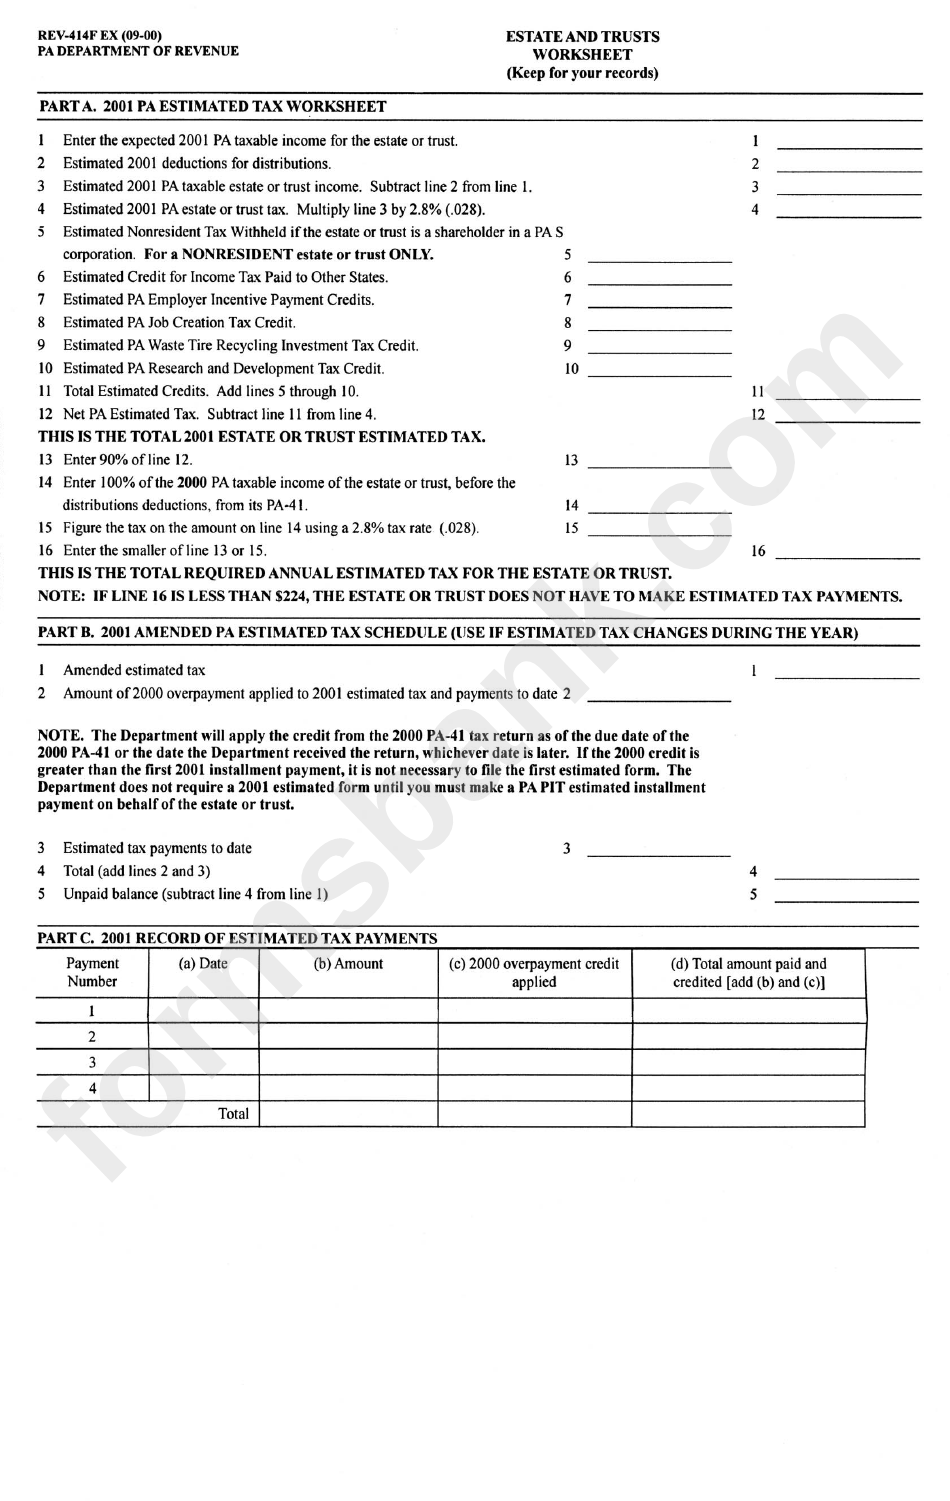 Form Rev-414f Ex - Estate And Trusts Worksheet - Pennsylvania Department Of Revenue